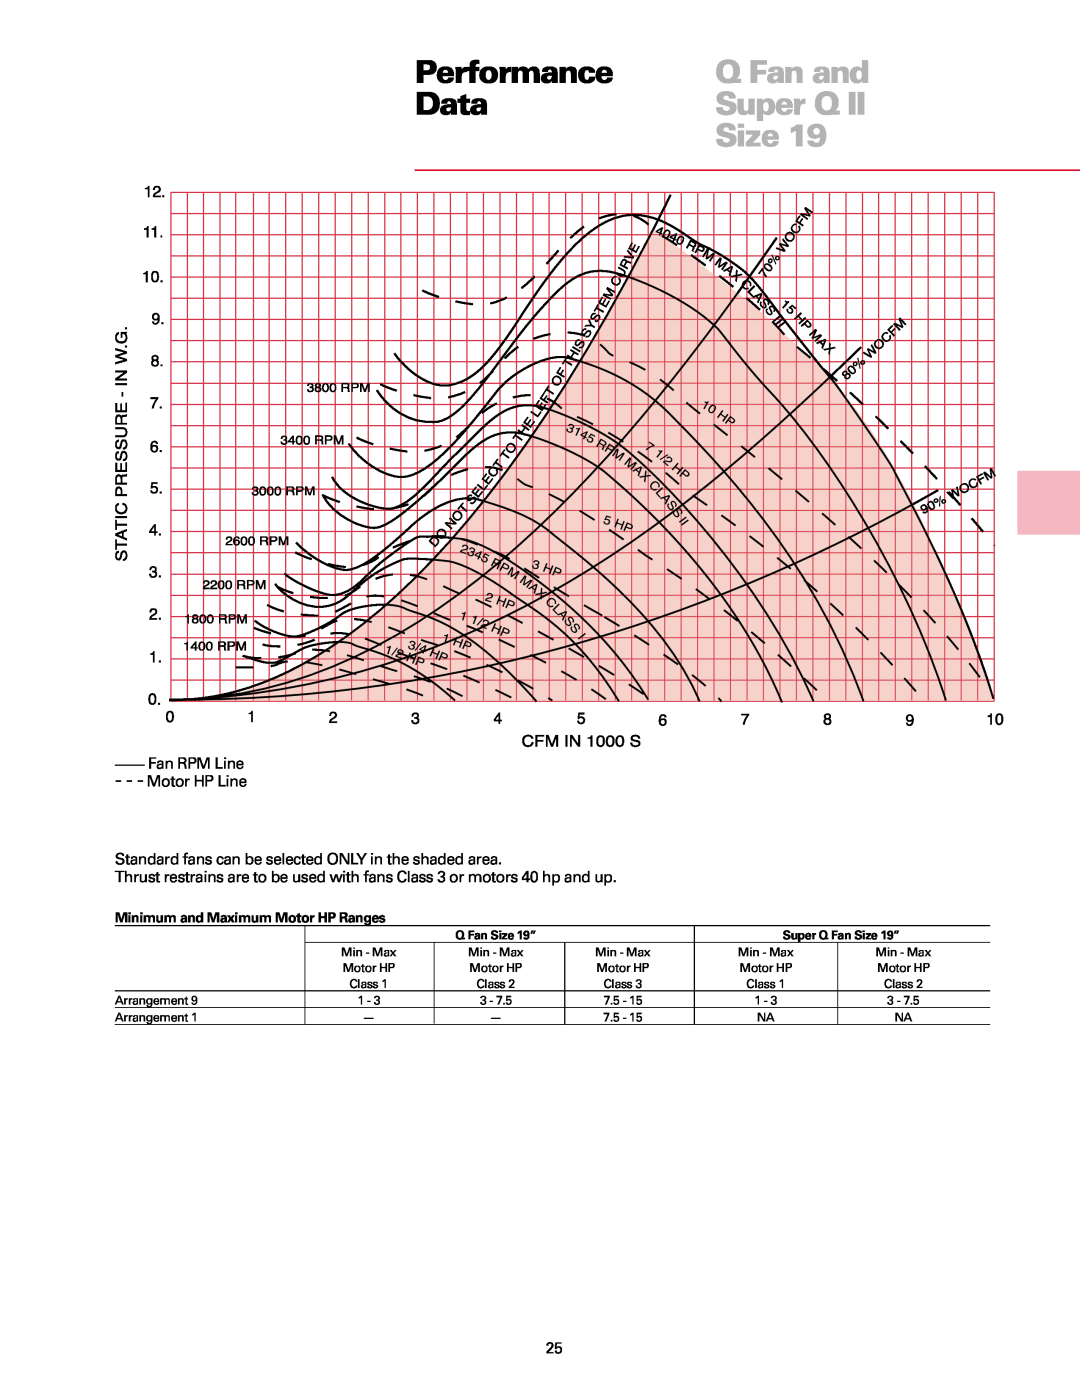 Trane manual Performance, Q Fan and, Data, Super Q Fan Size 19” 